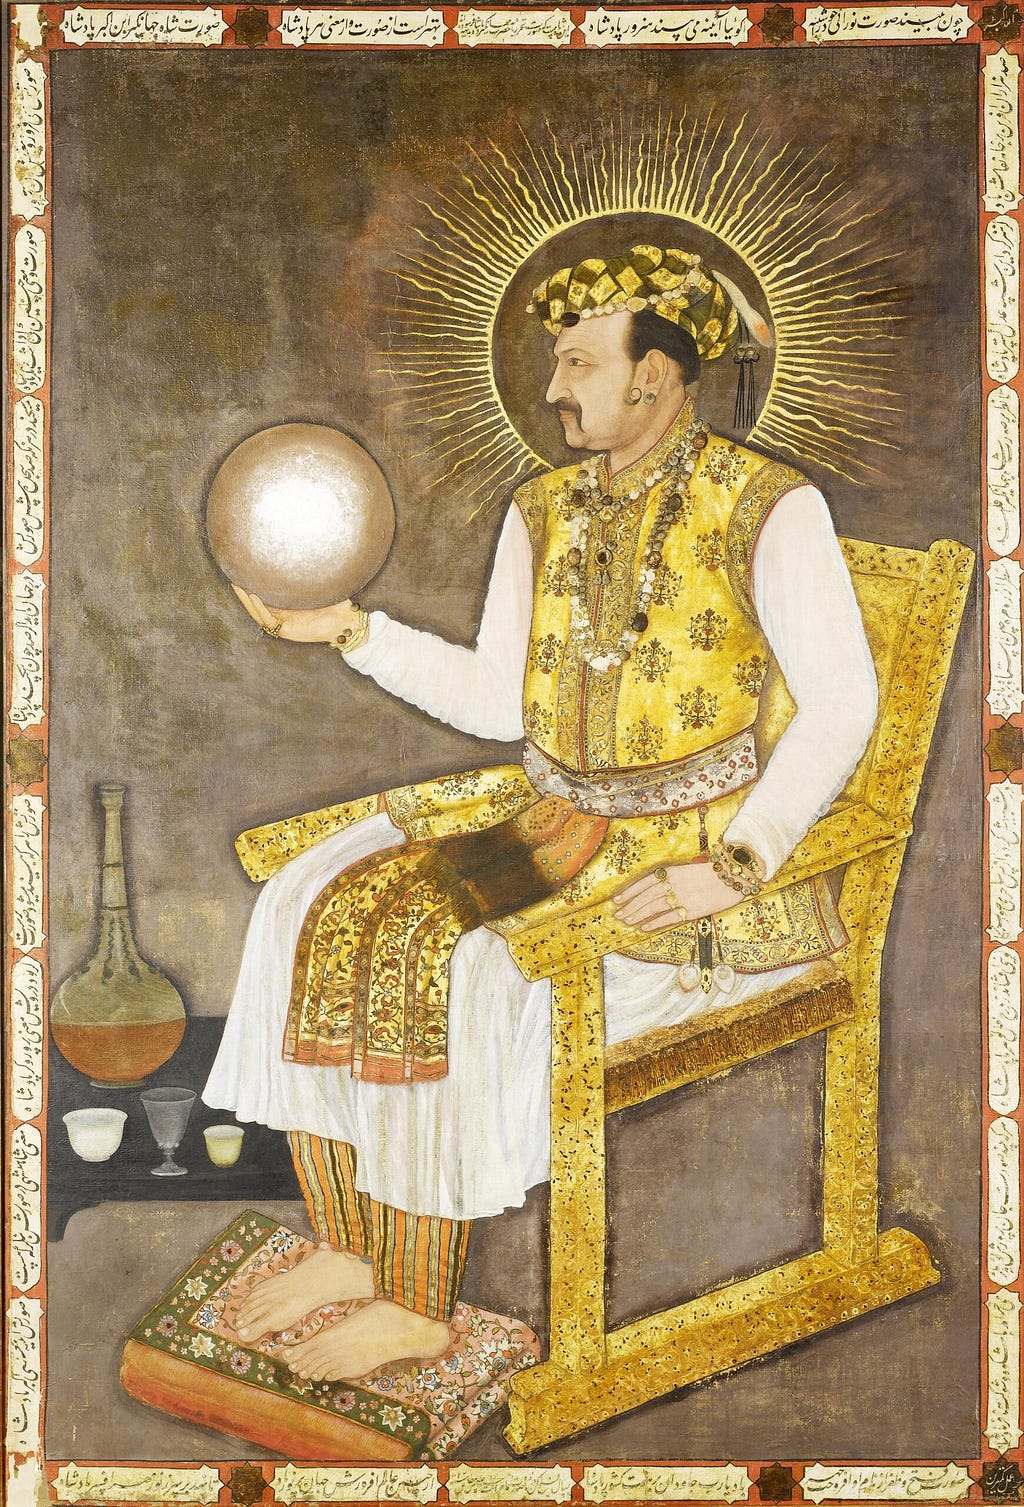 Jahangir: The fourth ruler of Mughal dynasty